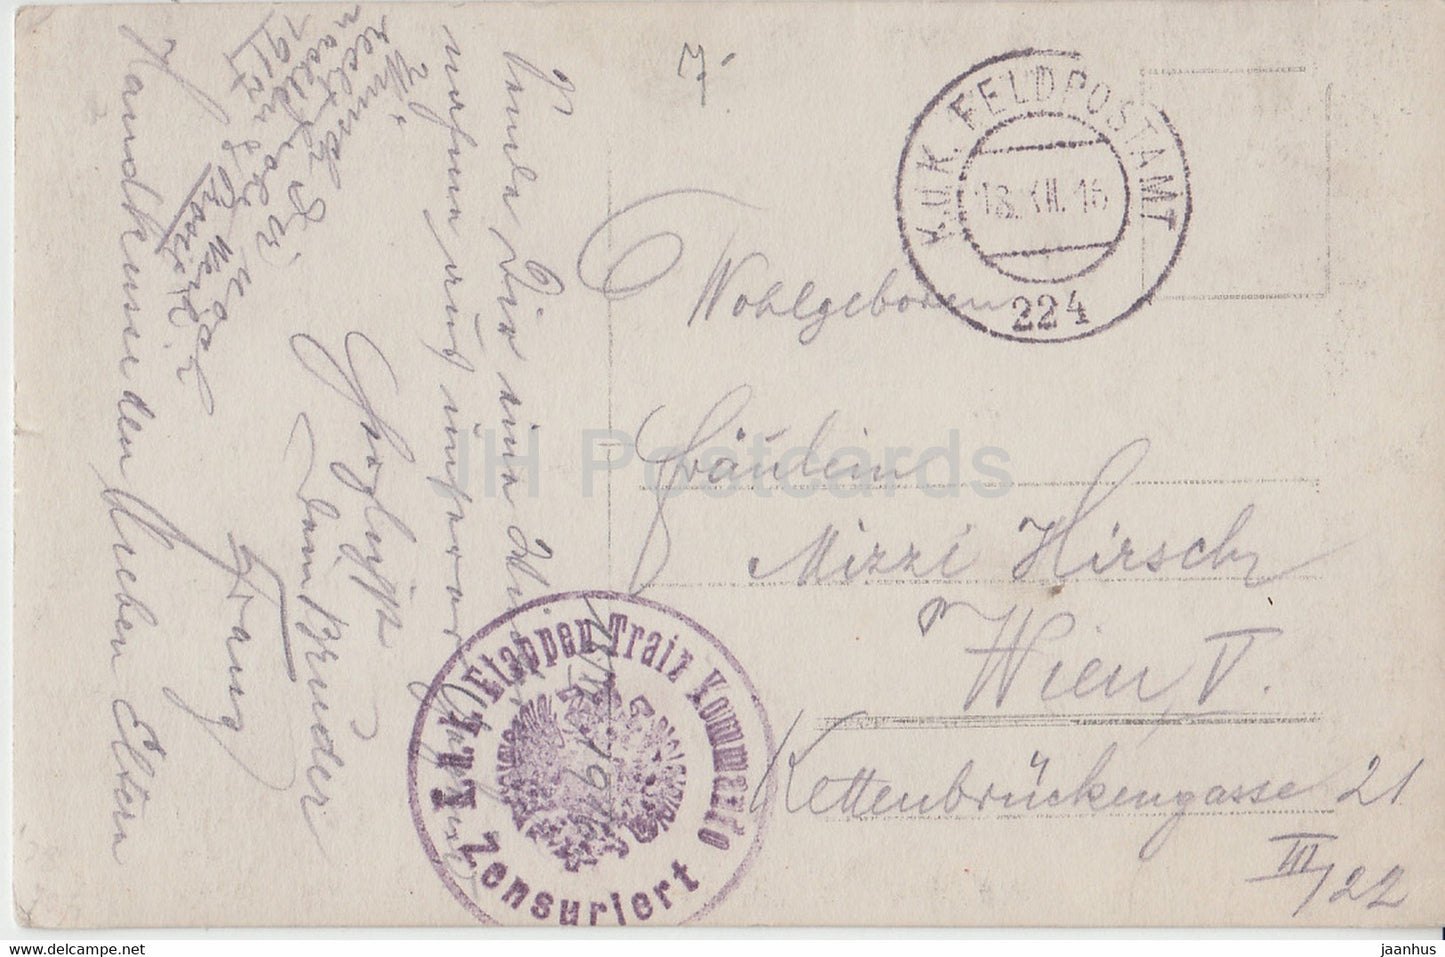 Winter - Etappen Train Kommando - Zensuriert - Feldpost - old postcard - 1916 - Belgium - used